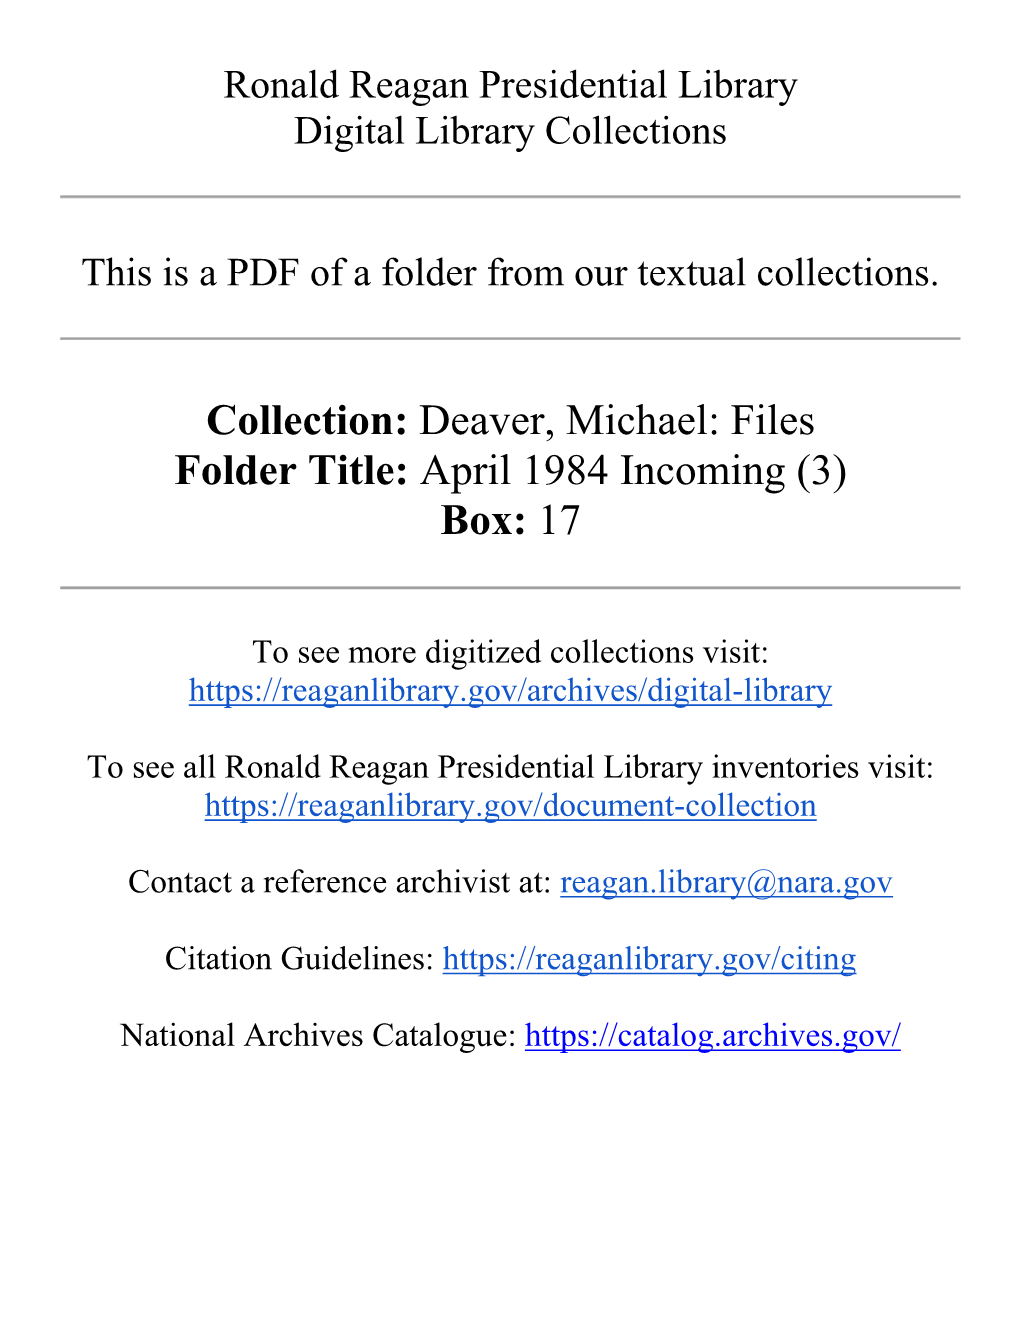 Deaver, Michael: Files Folder Title: April 1984 Incoming (3) Box: 17